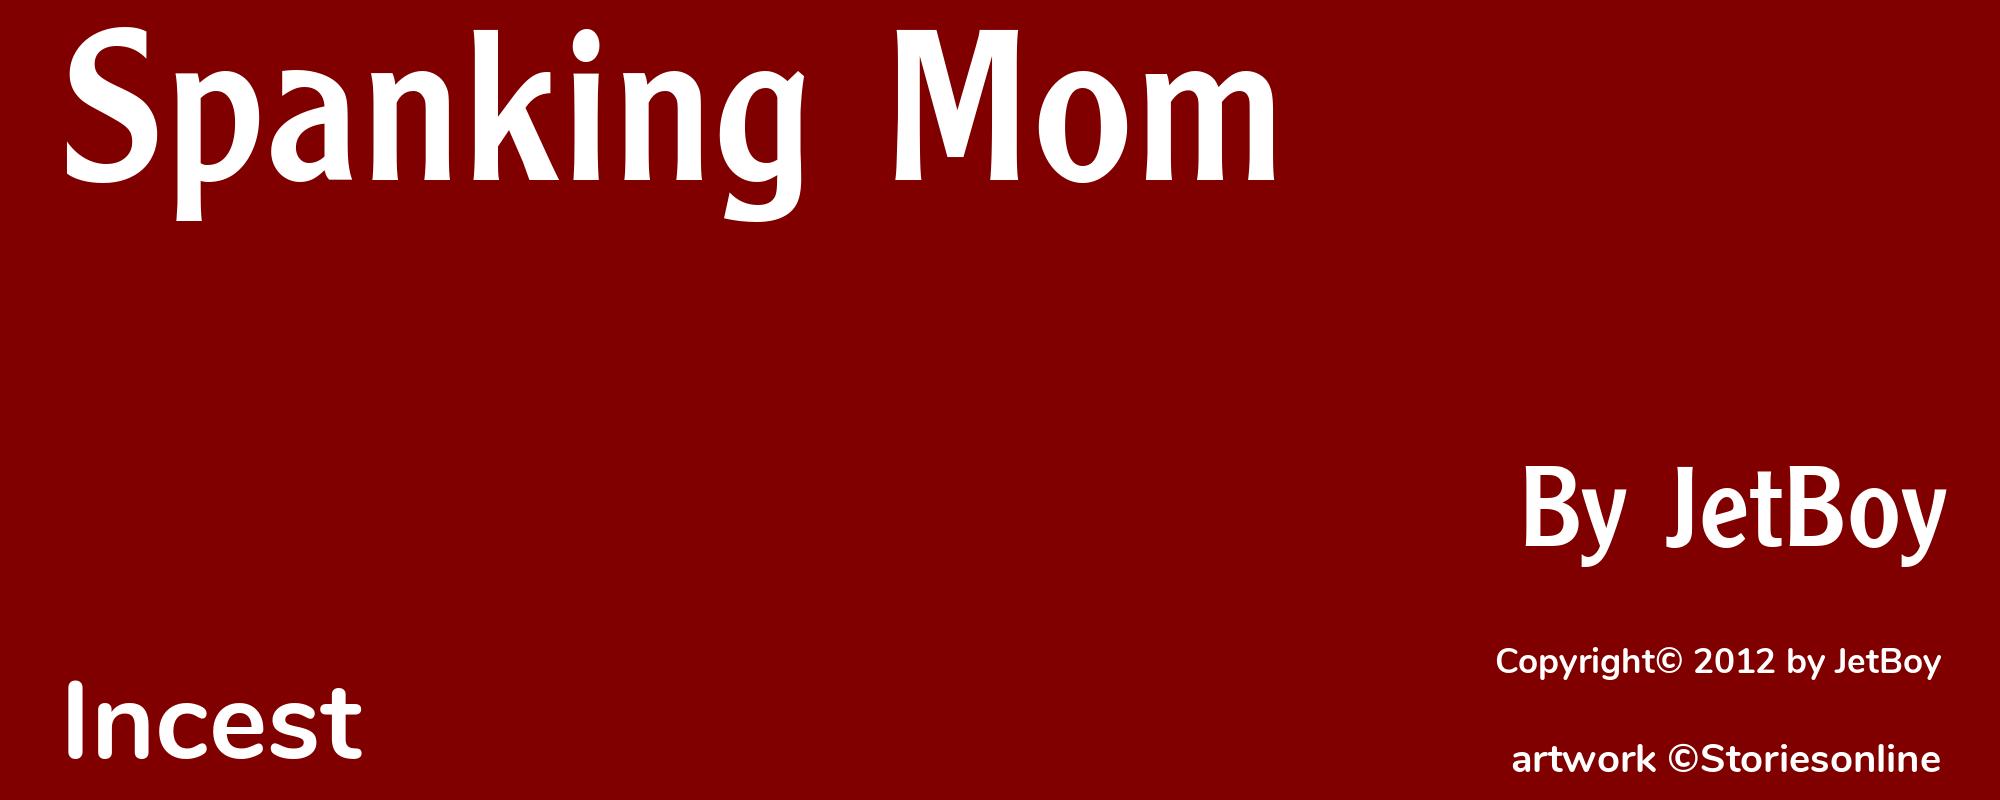 Spanking Mom - Cover